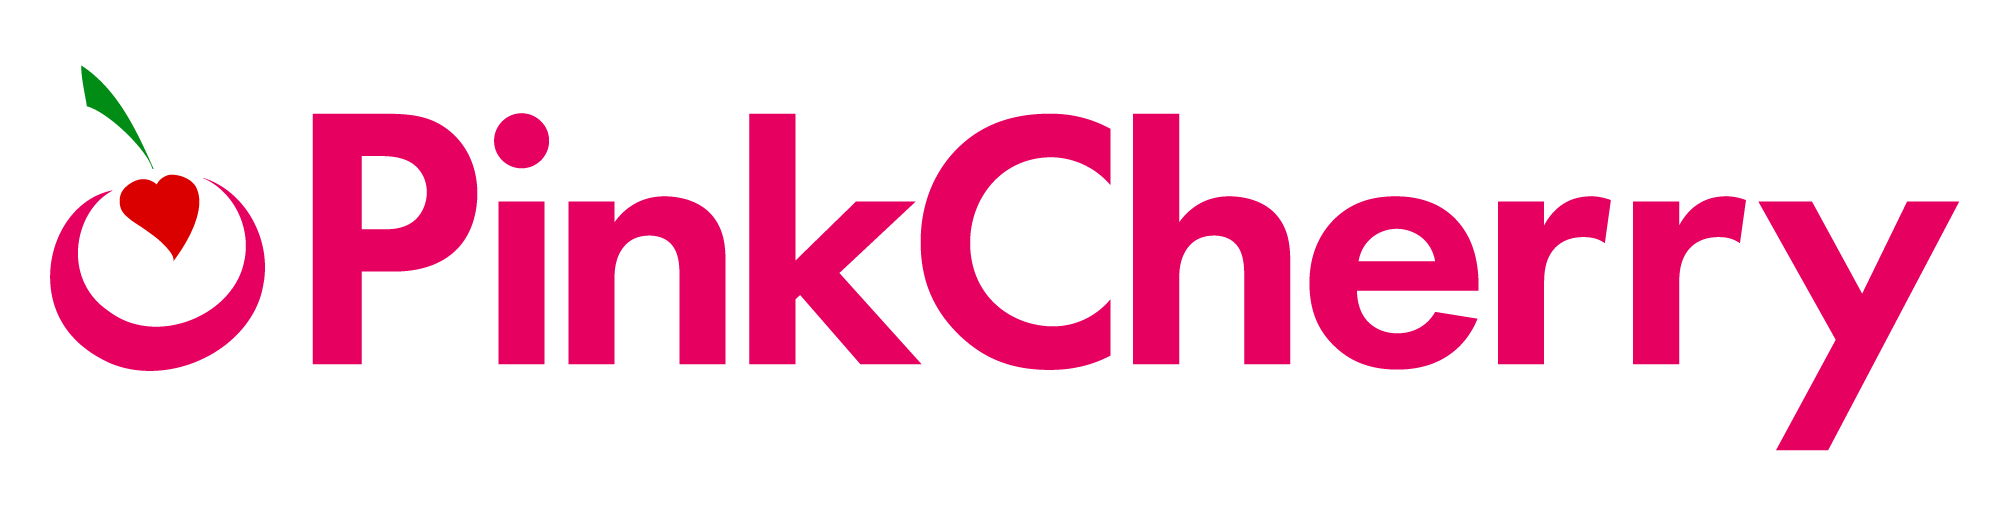 PinkCherry.com